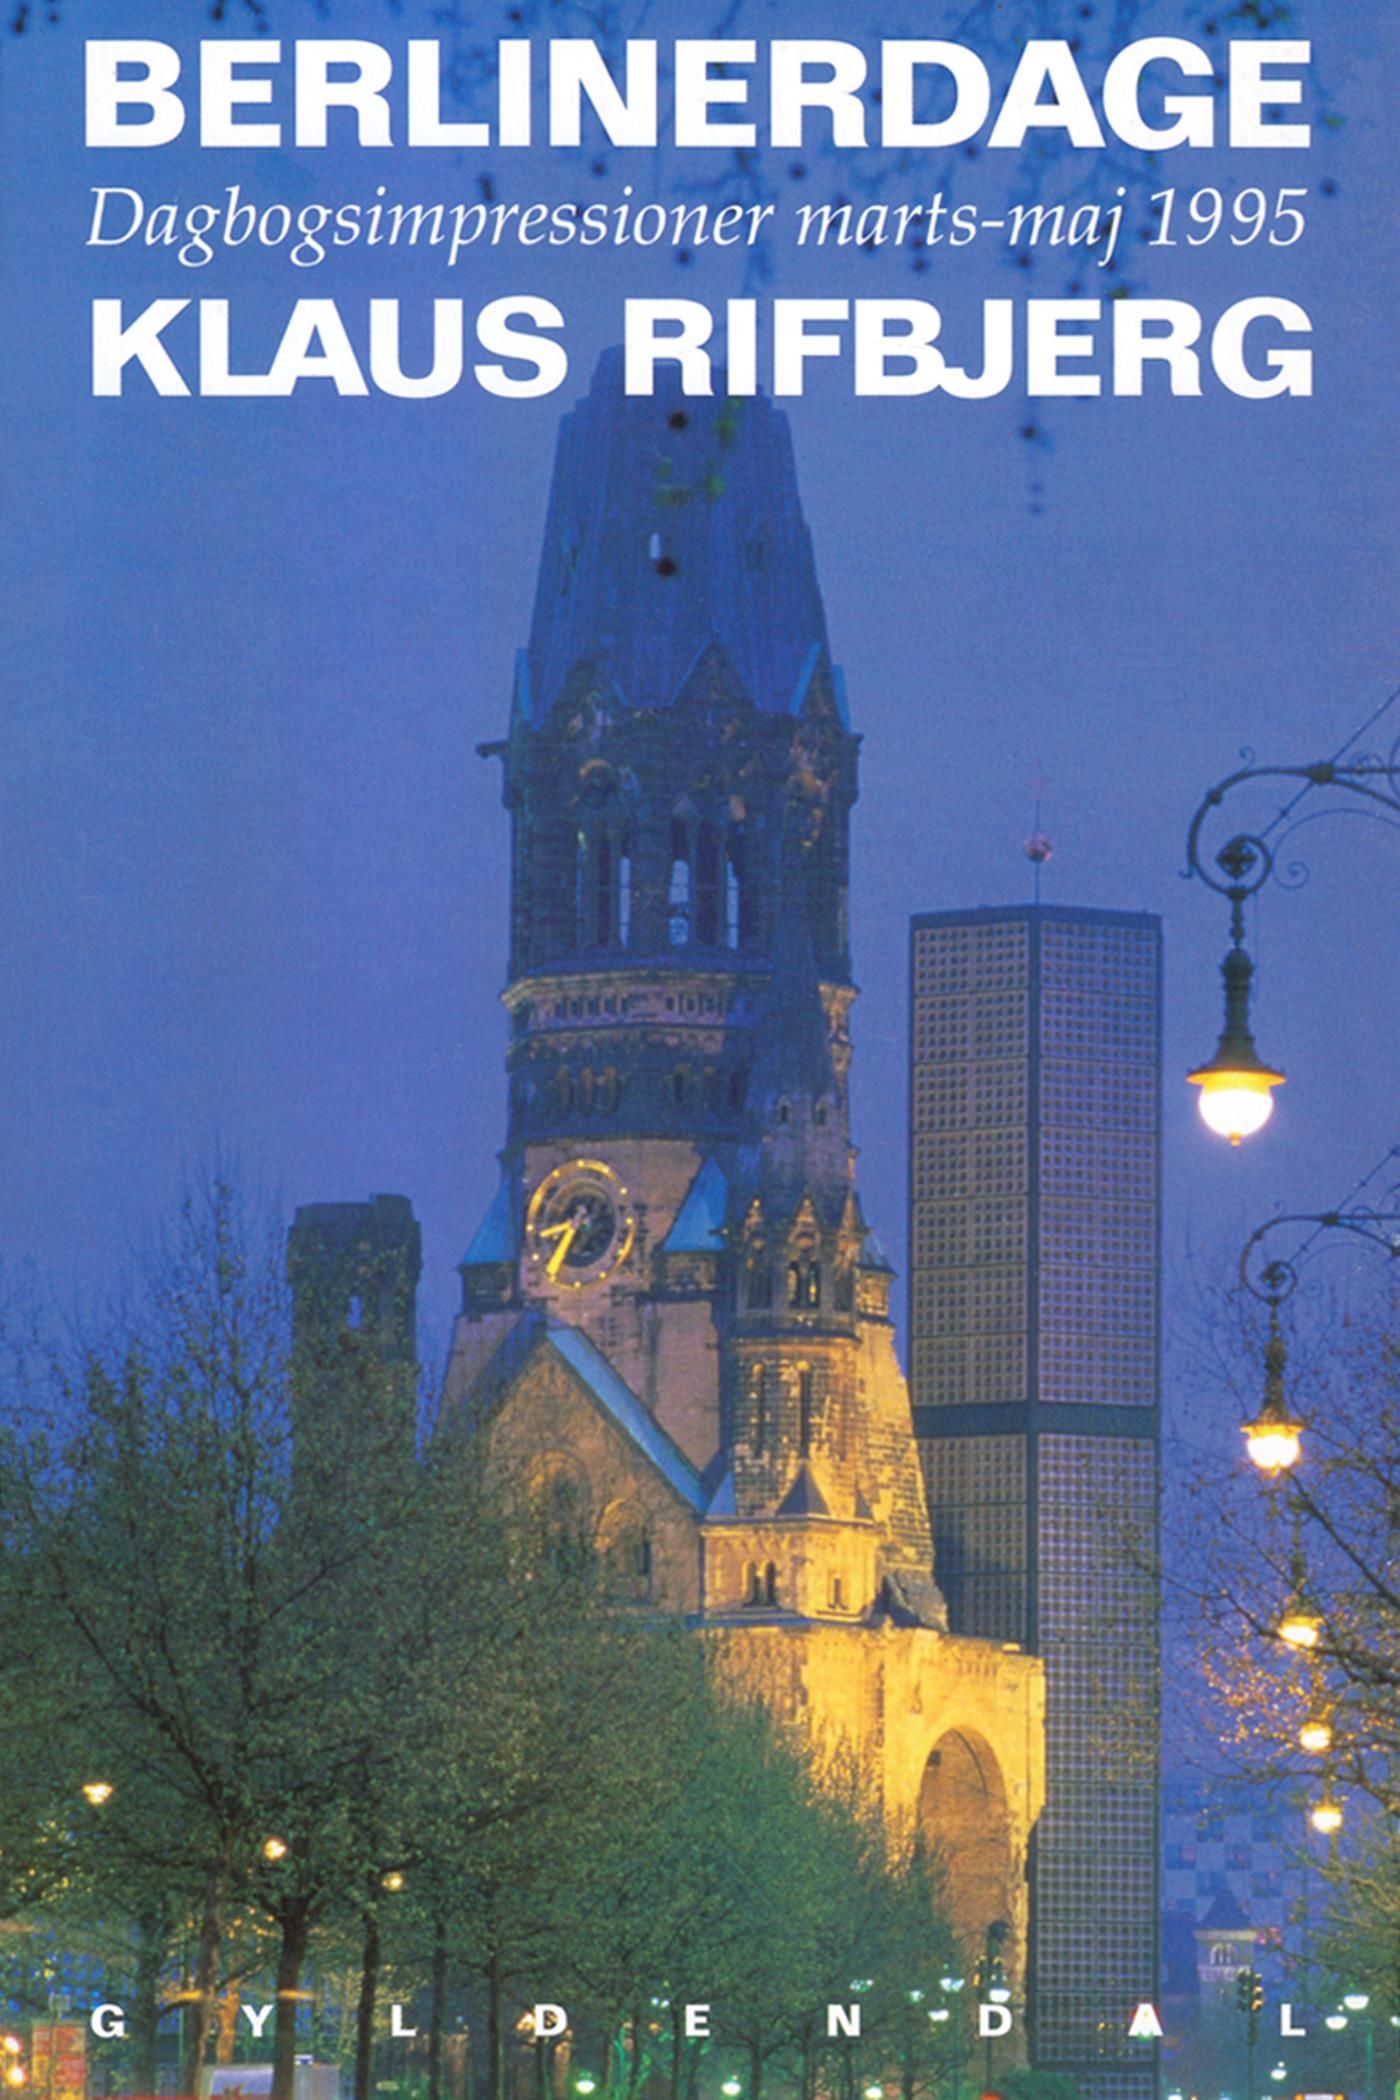 Berlinerdage, eBook by Klaus Rifbjerg